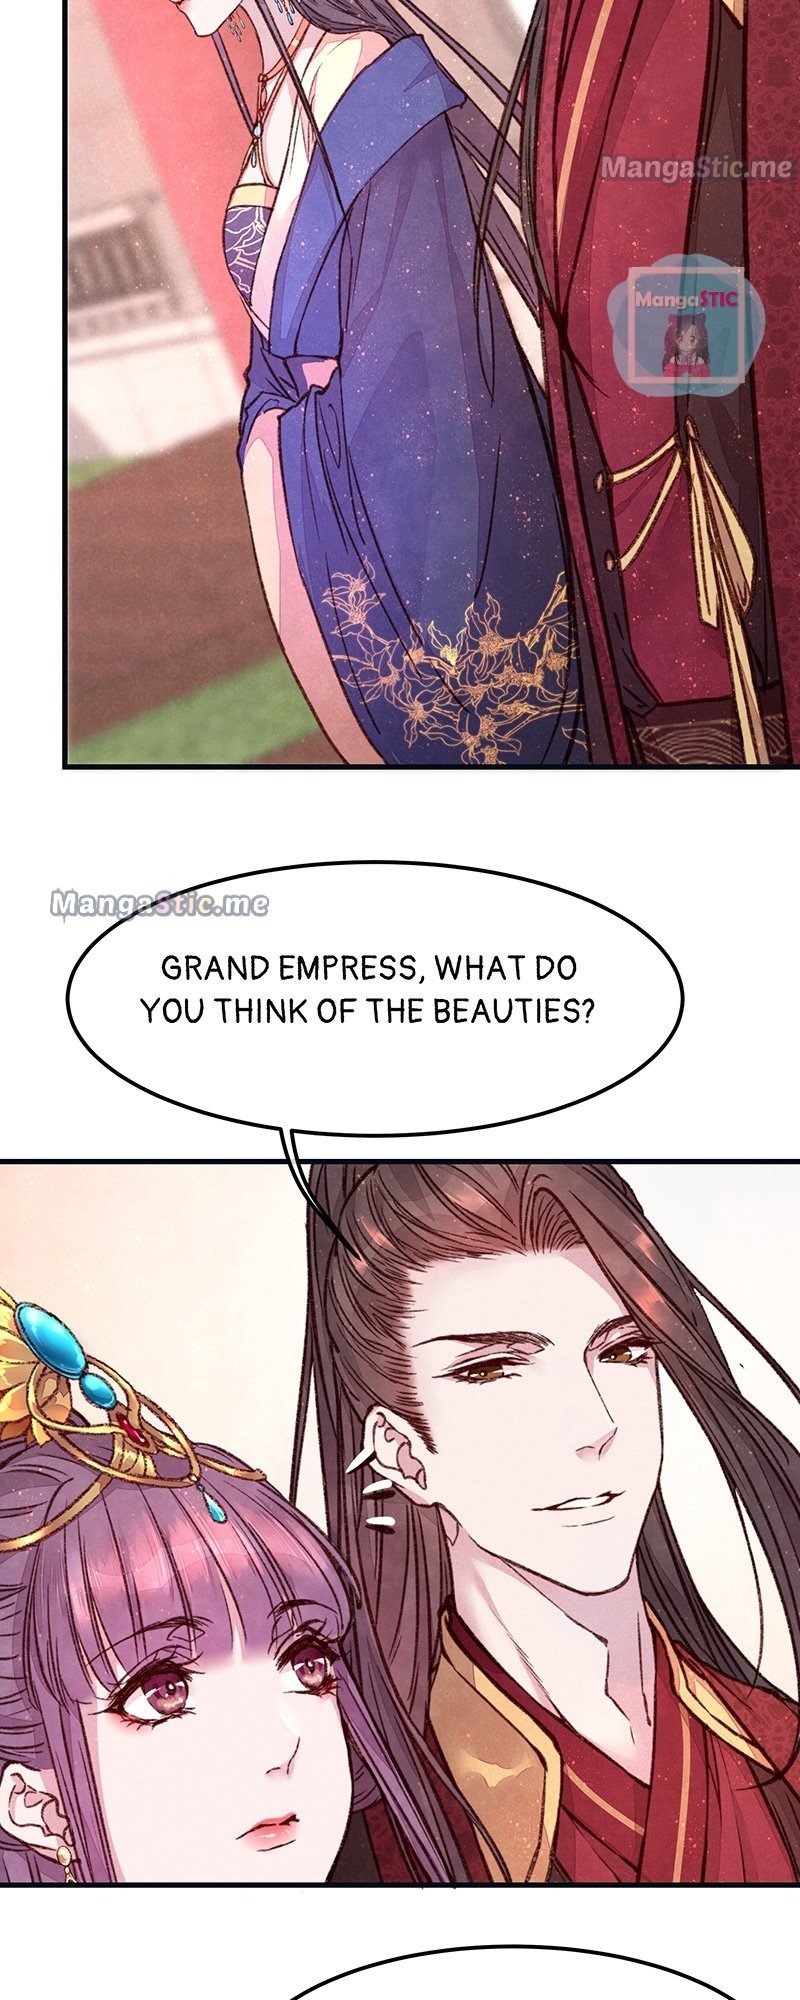 The Widowed Empress Needs Her Romance - Page 2